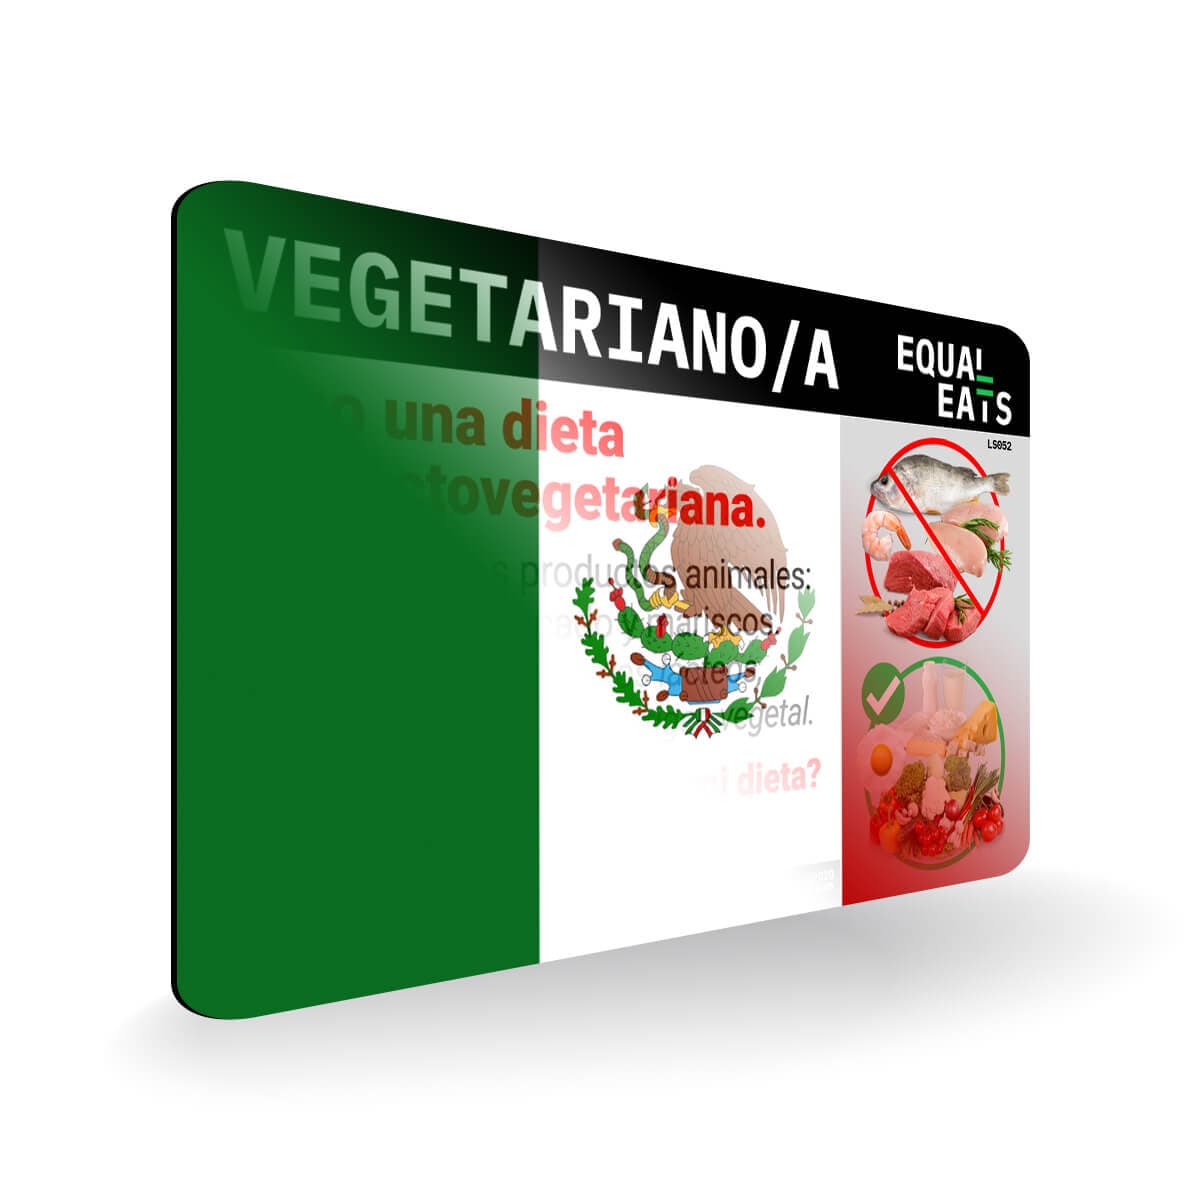 Lacto Ovo Vegetarian Diet in Spanish. Vegetarian Card for Latin America